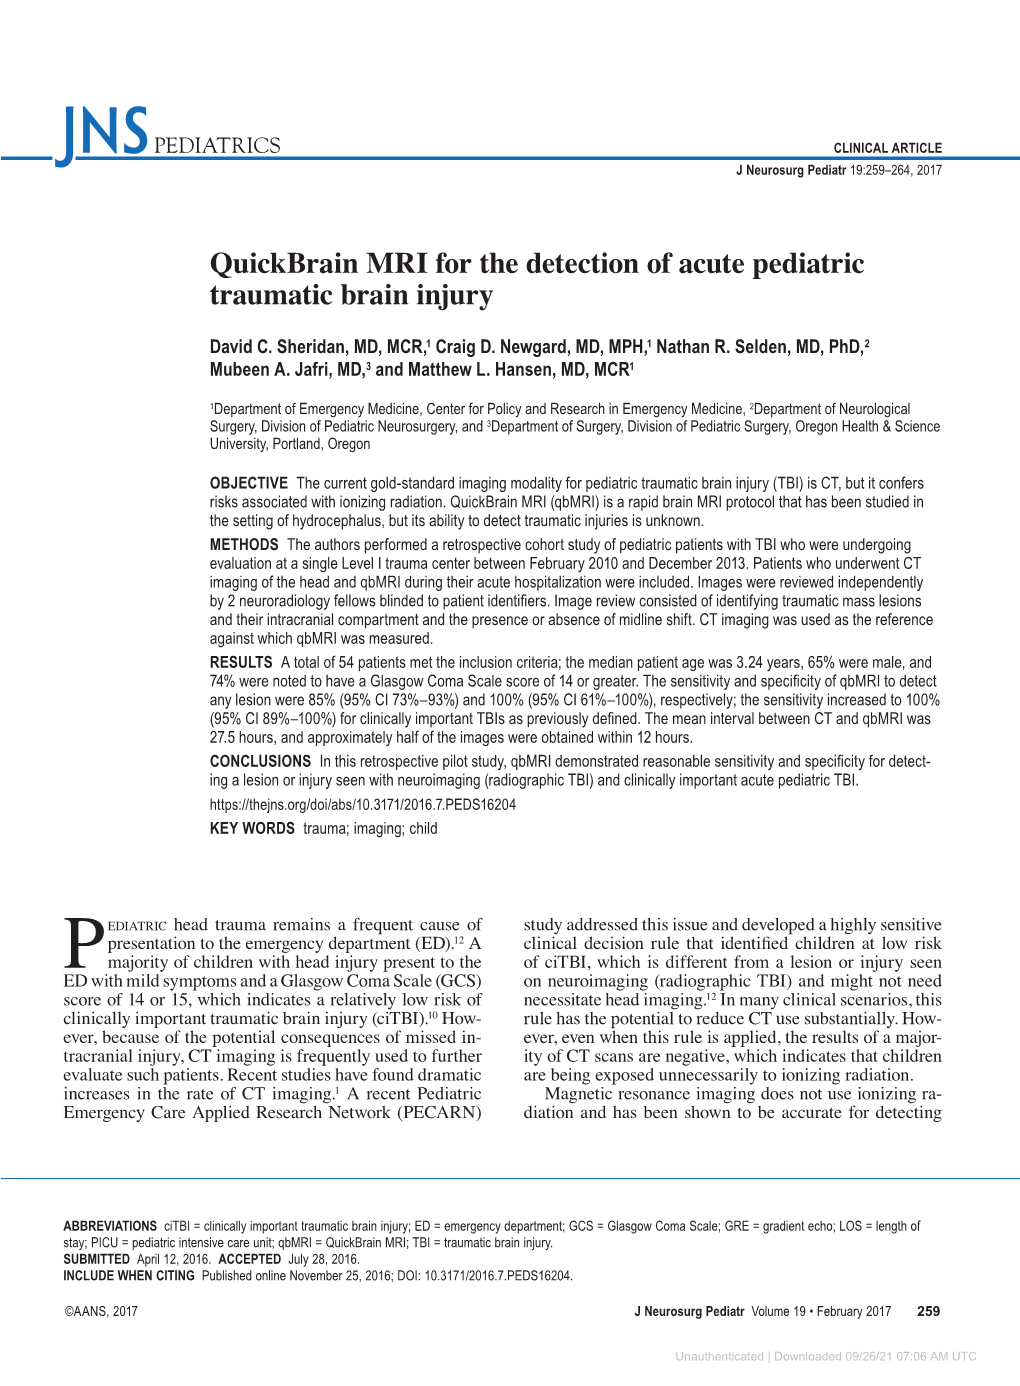 Quickbrain MRI for the Detection of Acute Pediatric Traumatic Brain Injury